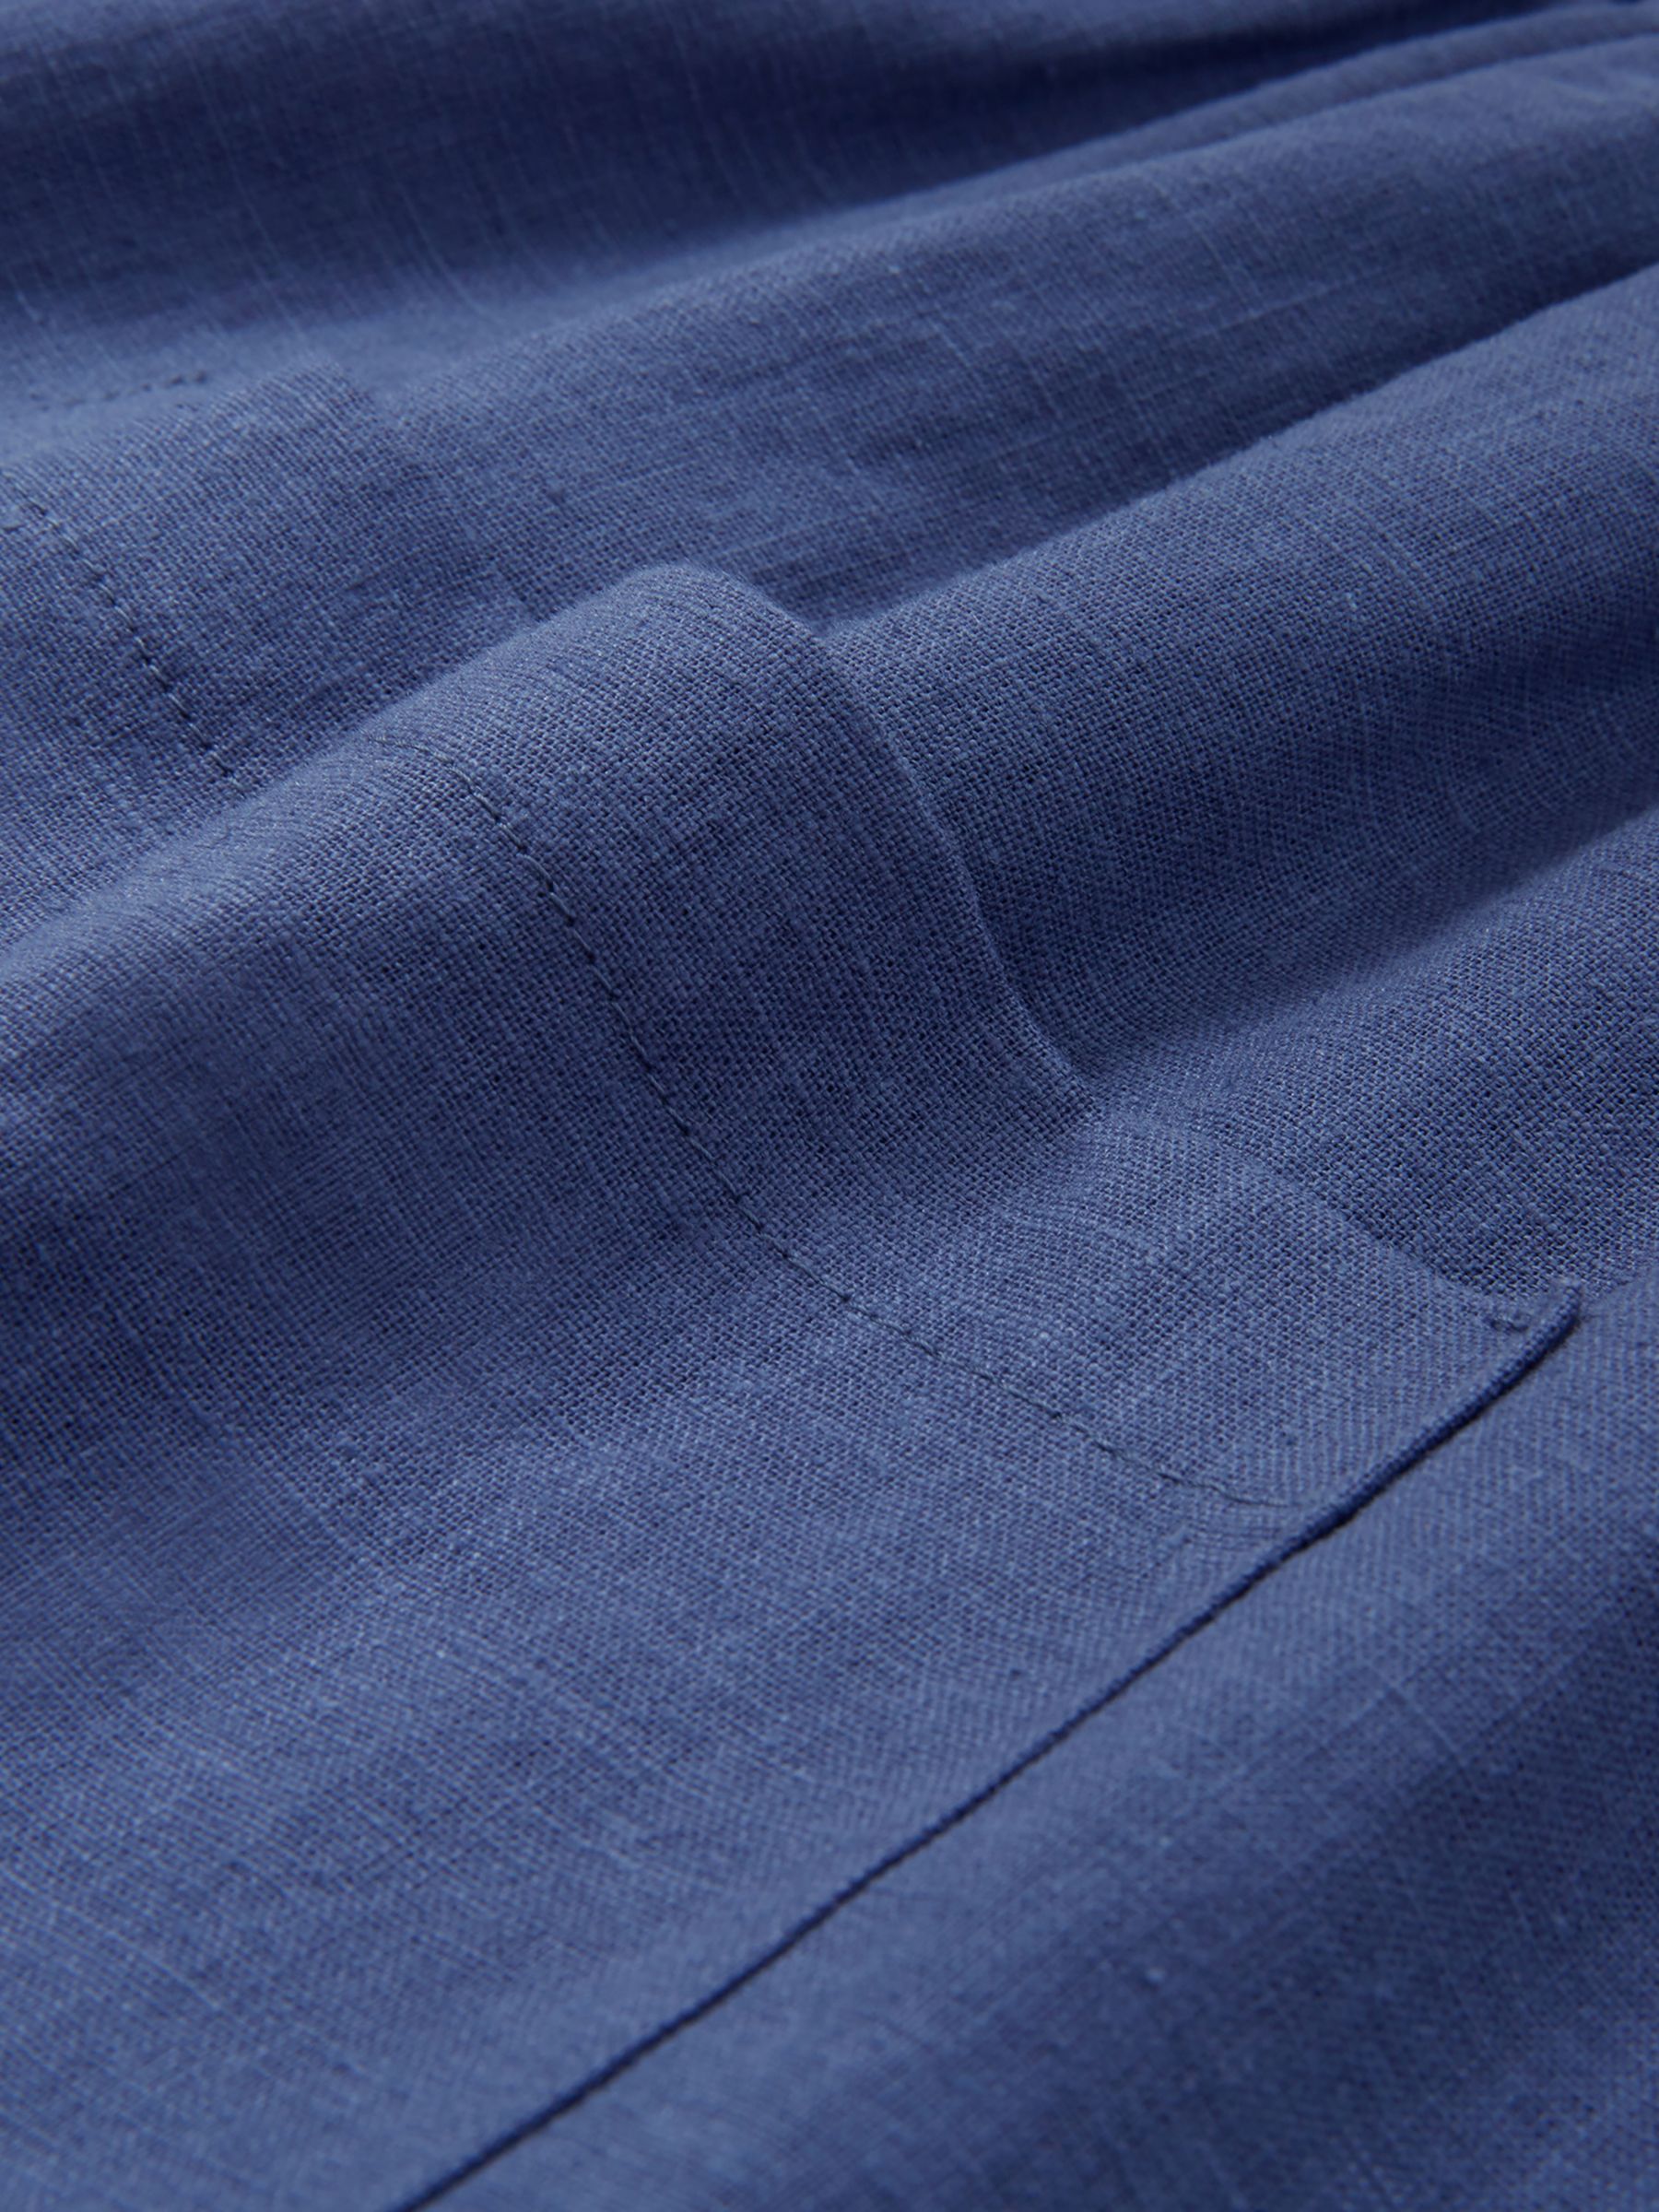 Celtic & Co. Linen Button Detail Midi Dress, Slate, 18